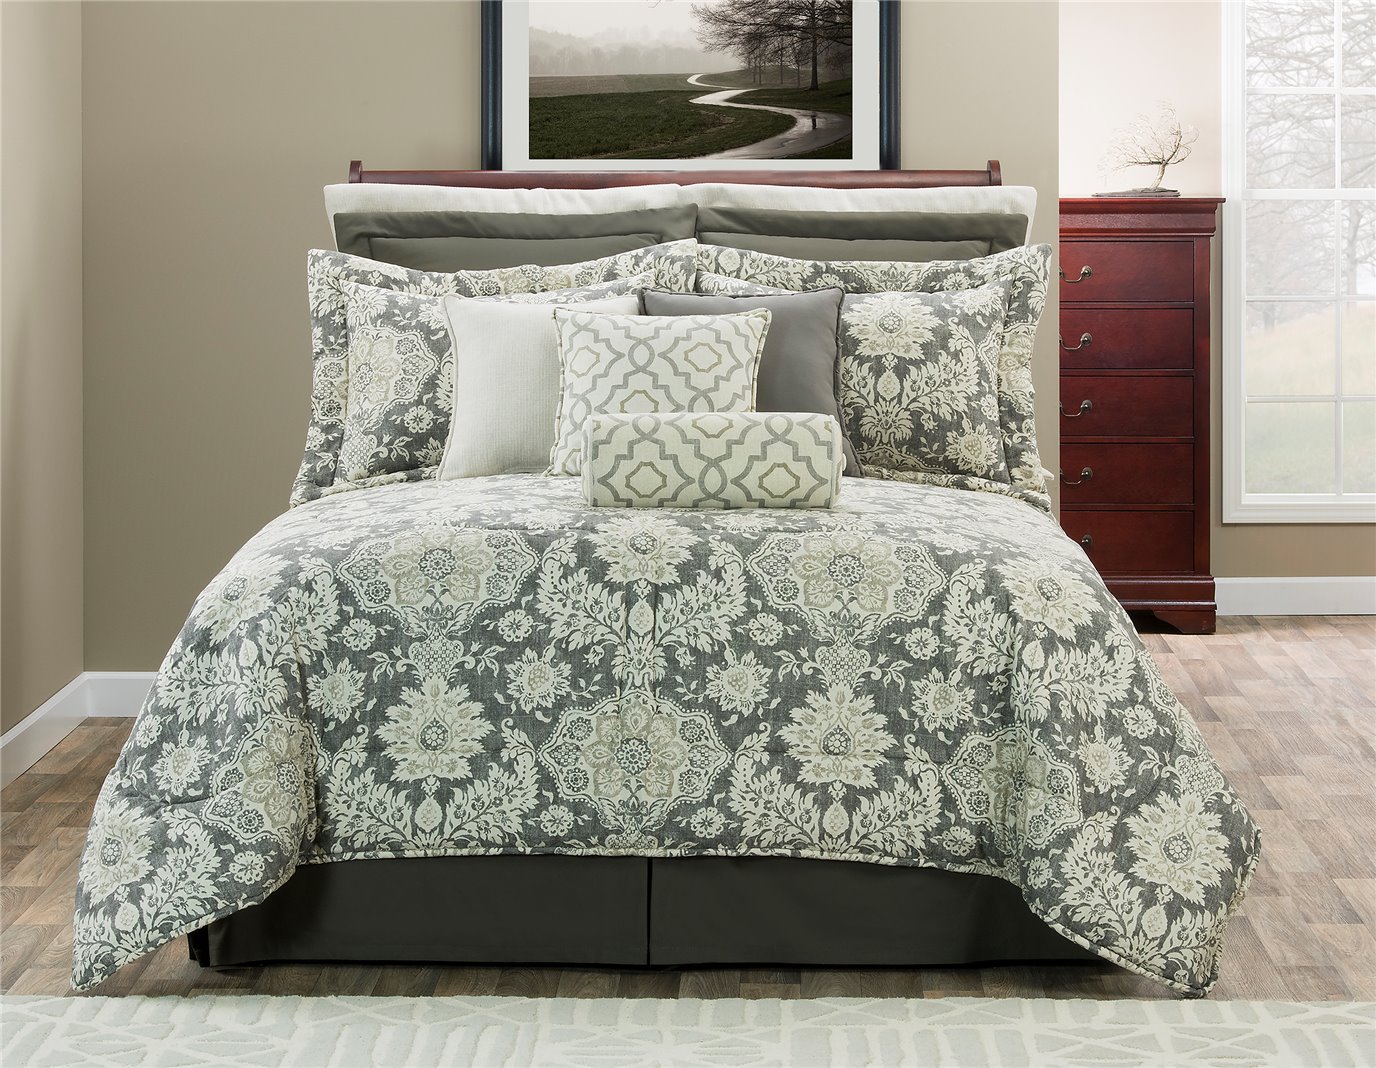 Belmont Metal Queen Comforter Set With, Bed Bath And Beyond Oversized King Comforter